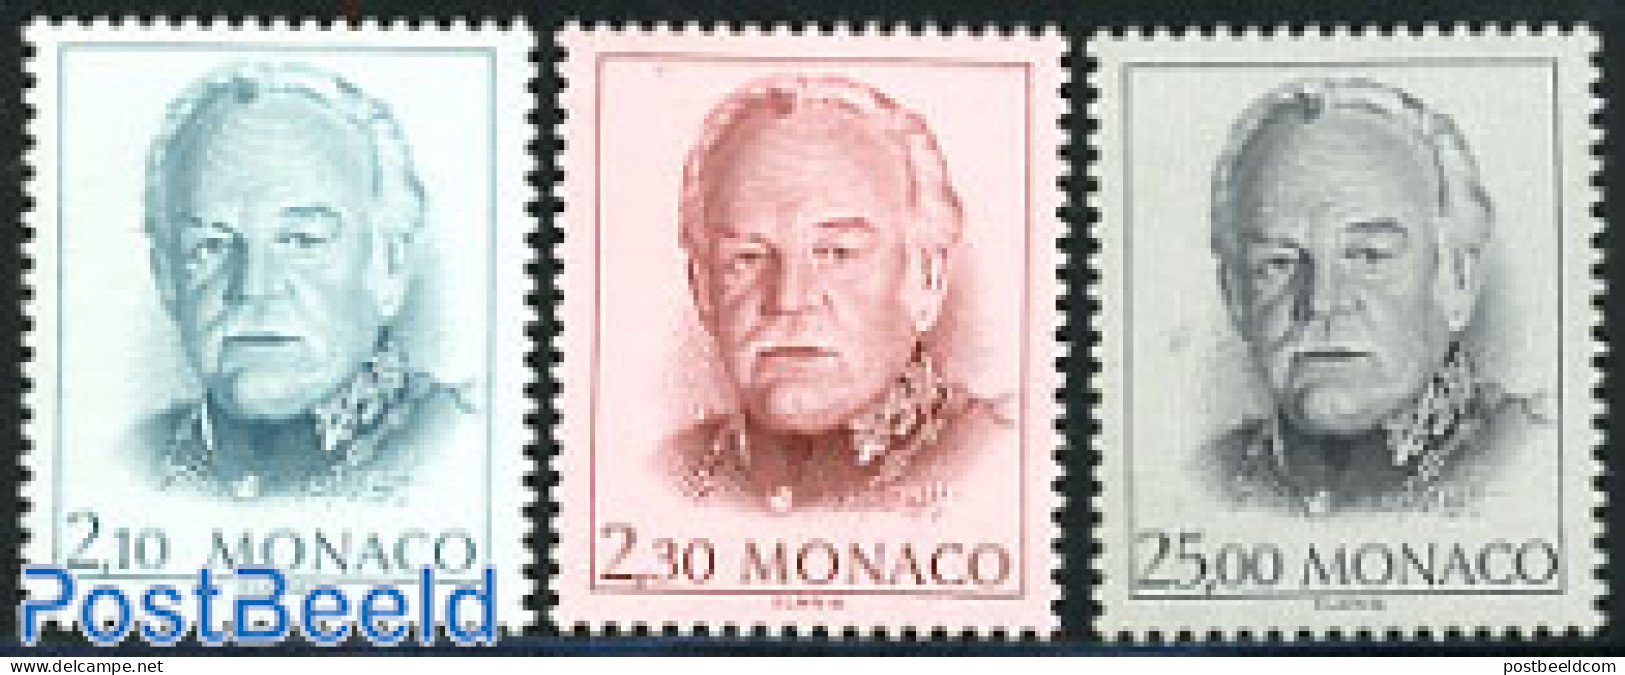 Monaco 1990 Definitives 3v, Mint NH - Ongebruikt